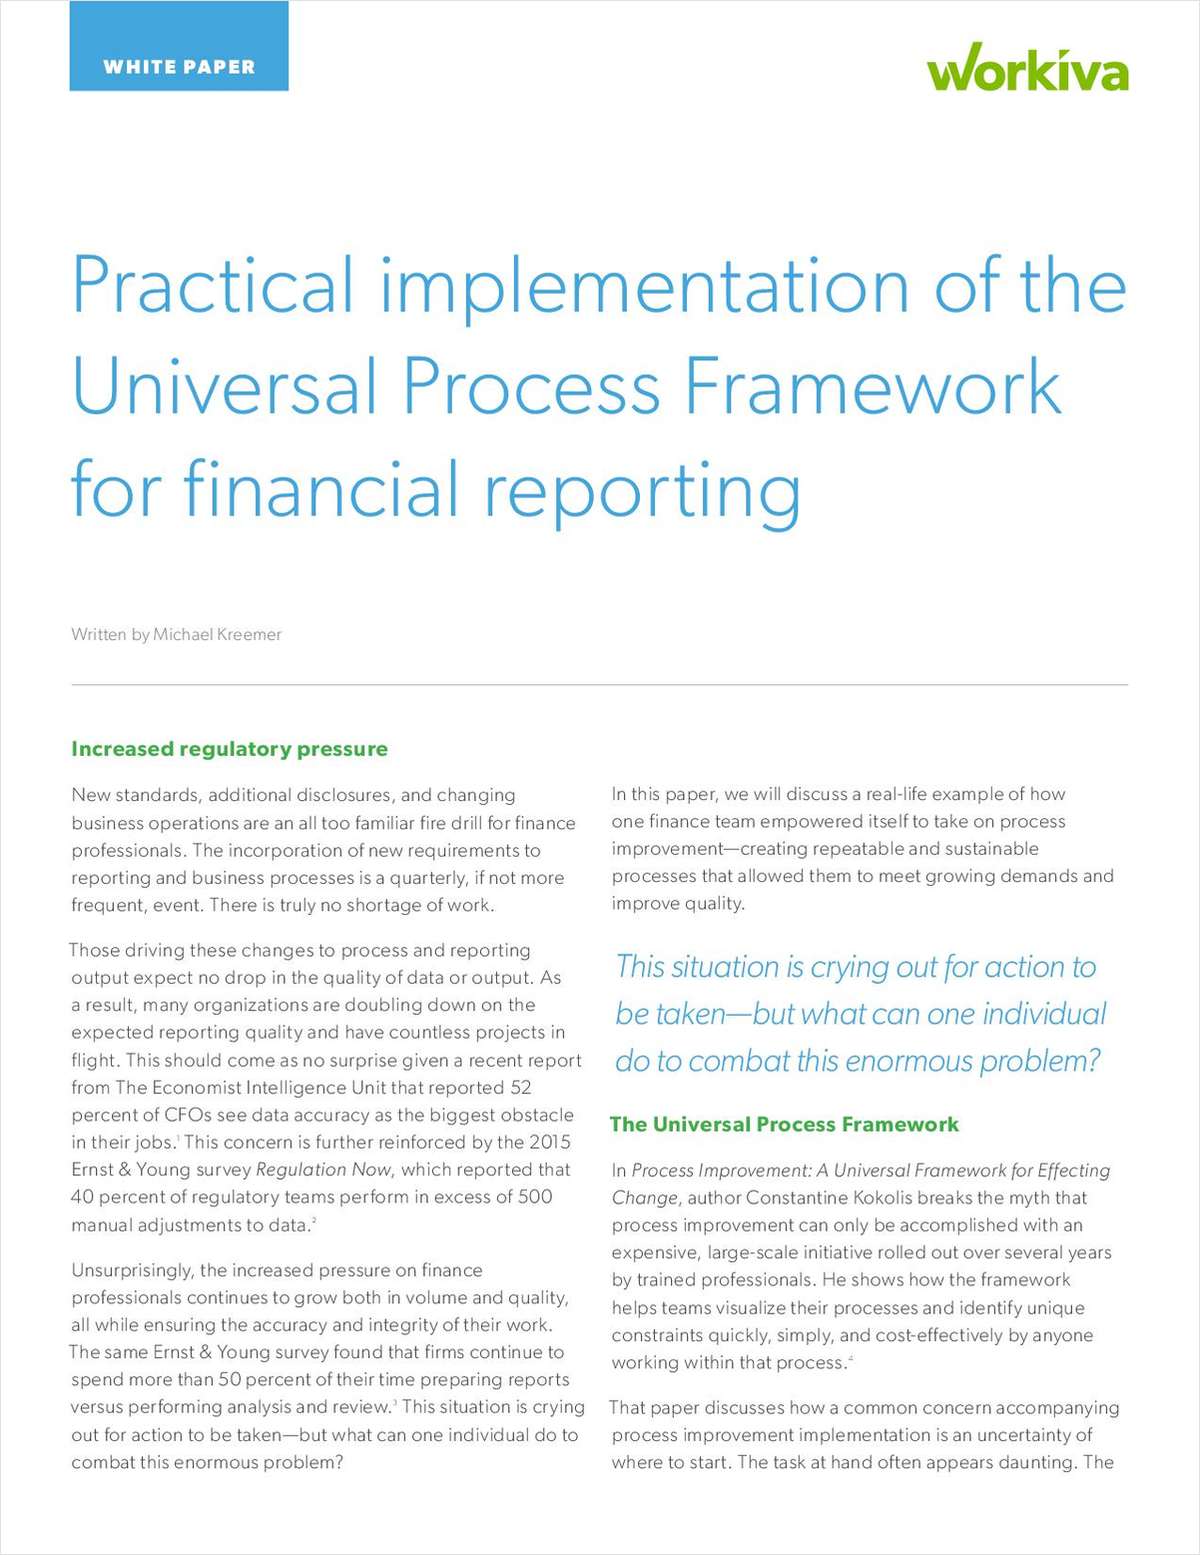 Process Improvement: A Practical Application of the Universal Framework